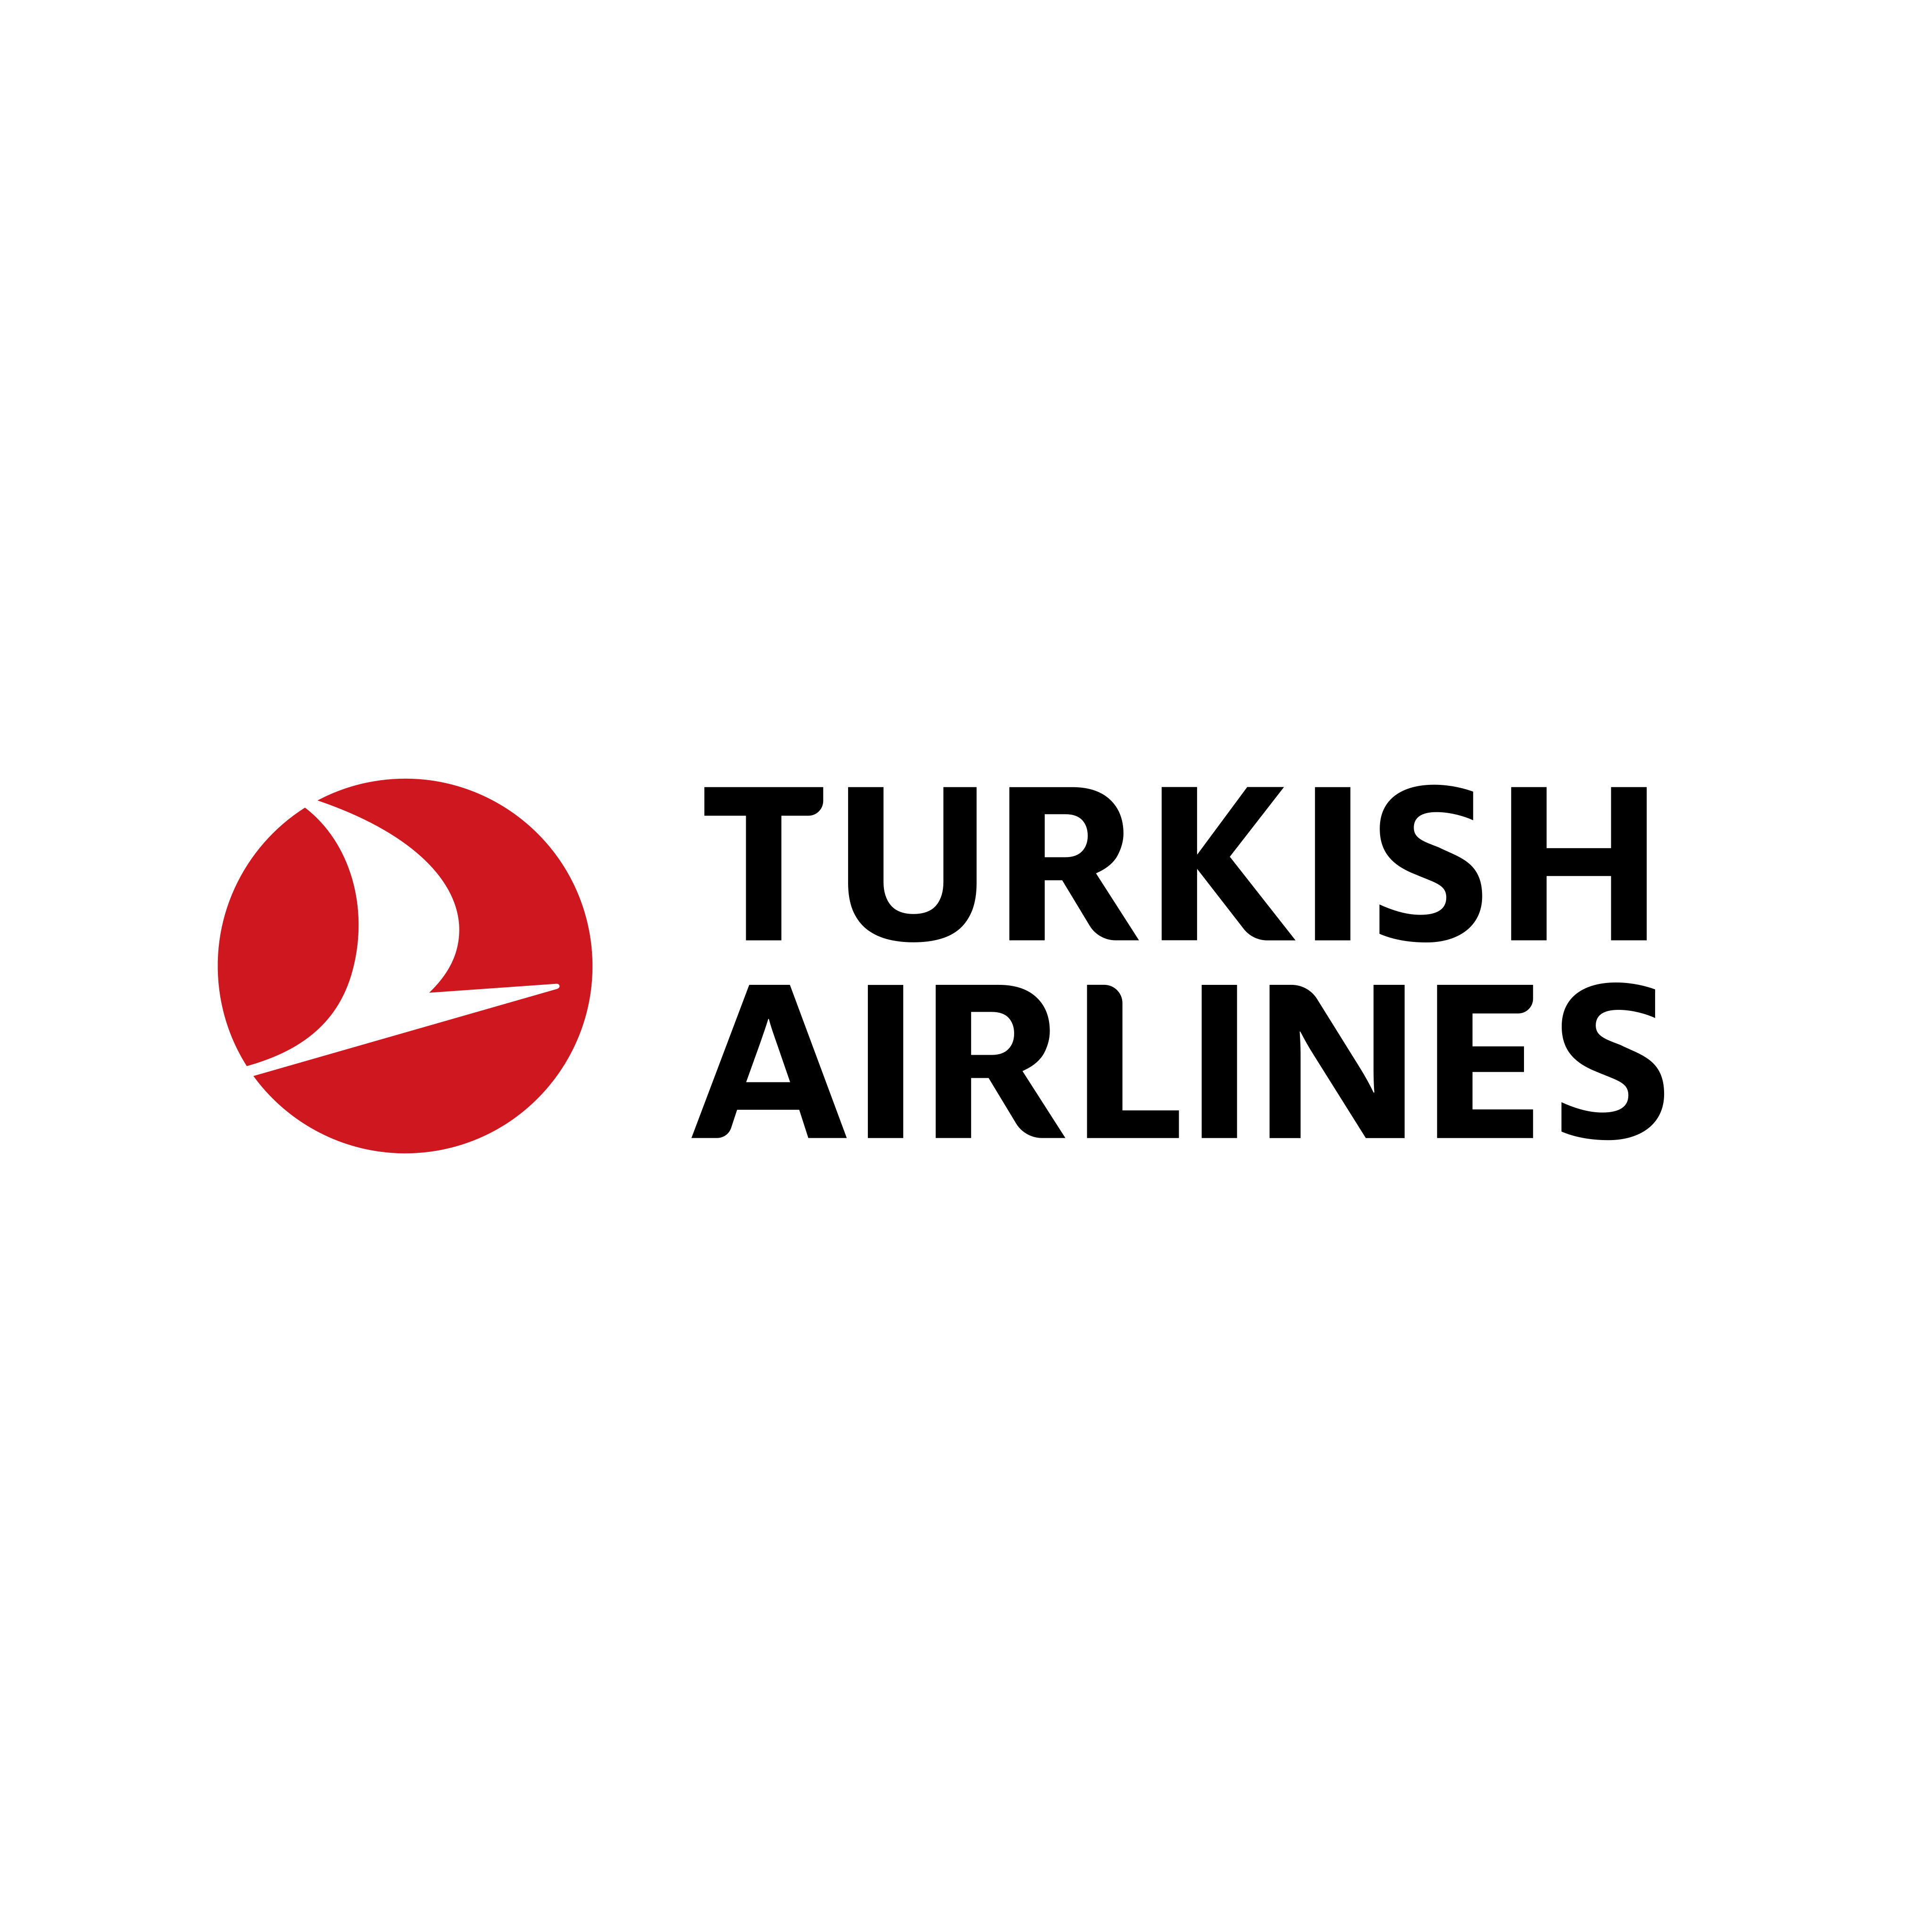 Turkish Airlines Vector Logo 